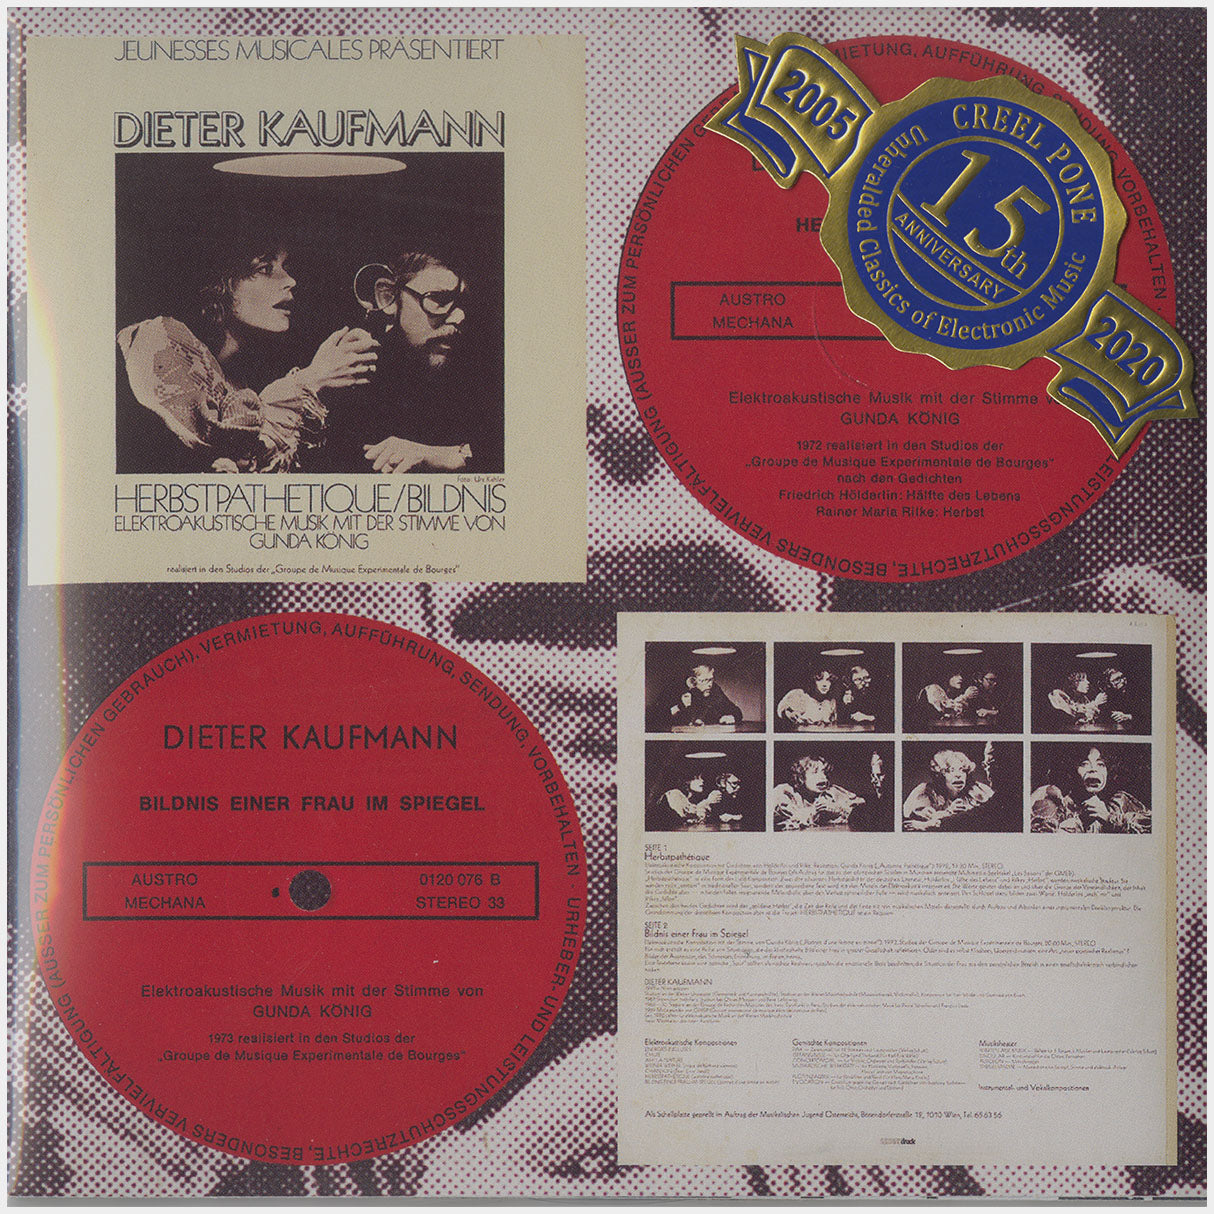 [CP 147 CD] Dieter Kaufmann; Herbstpathetique, Bildnis, Evocation+